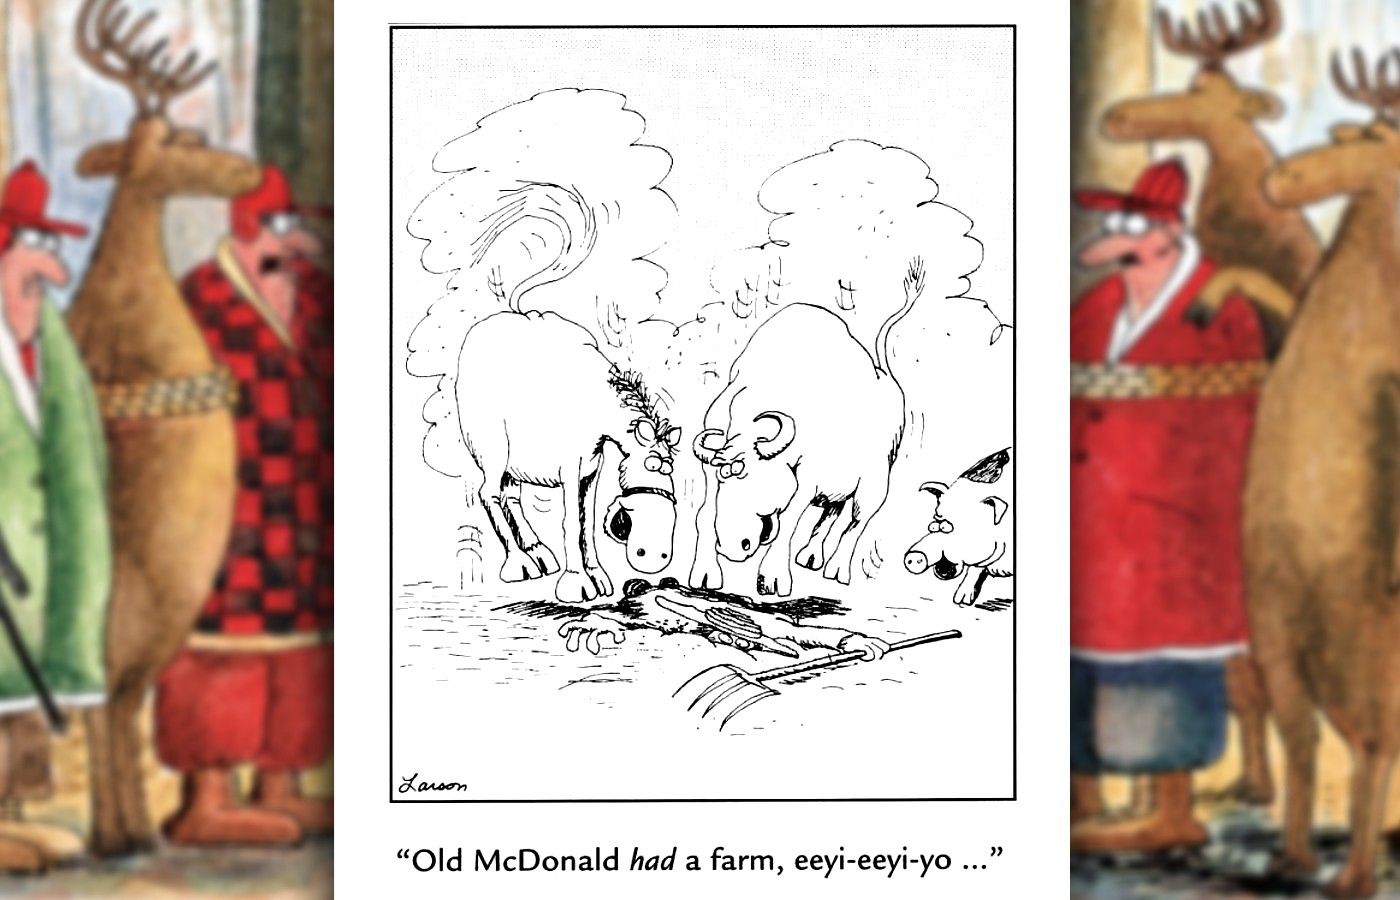 far side comic where old macdonald's animals trample him